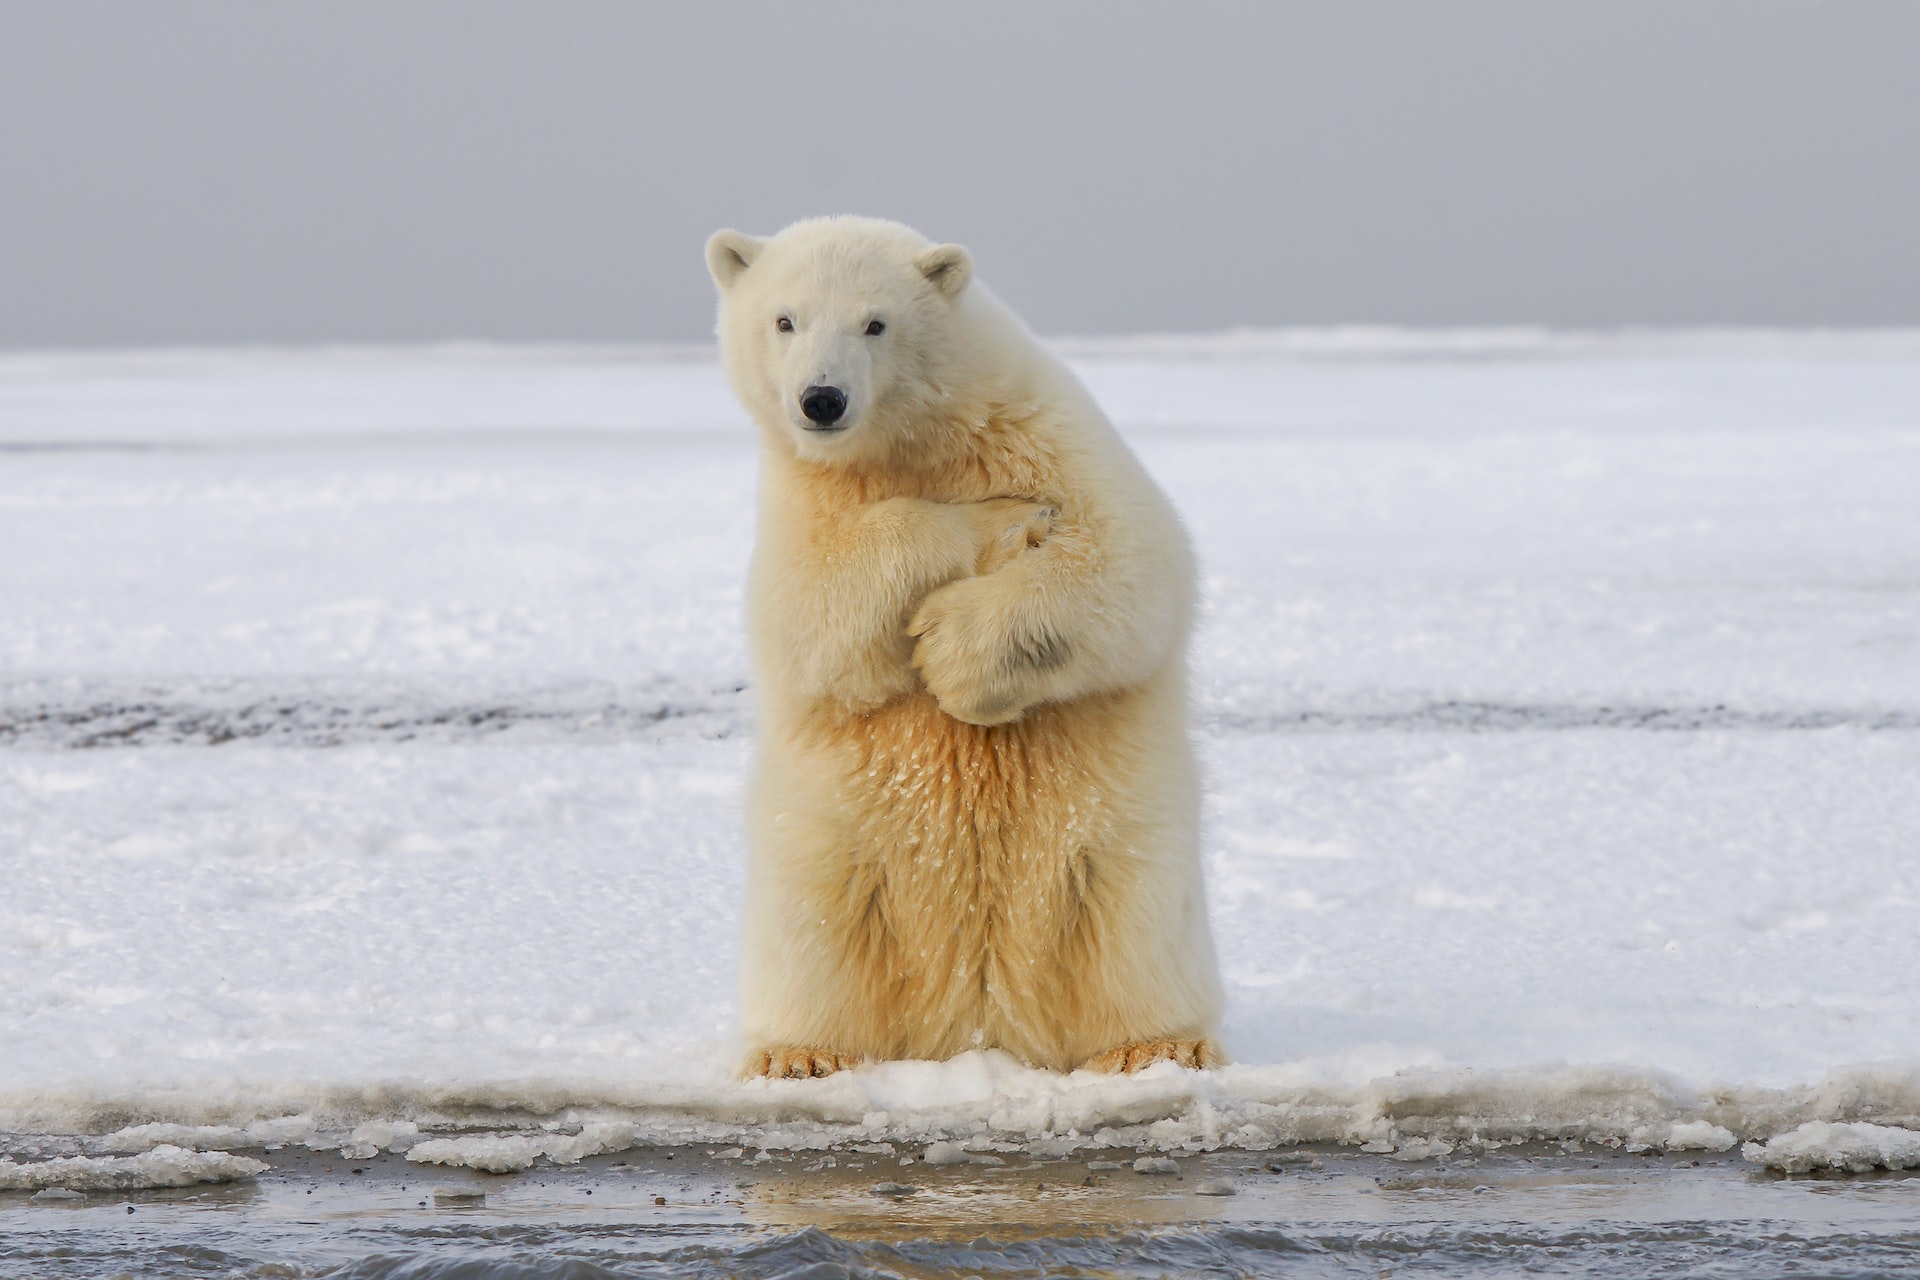 Why Are Polar Bears Endangered?